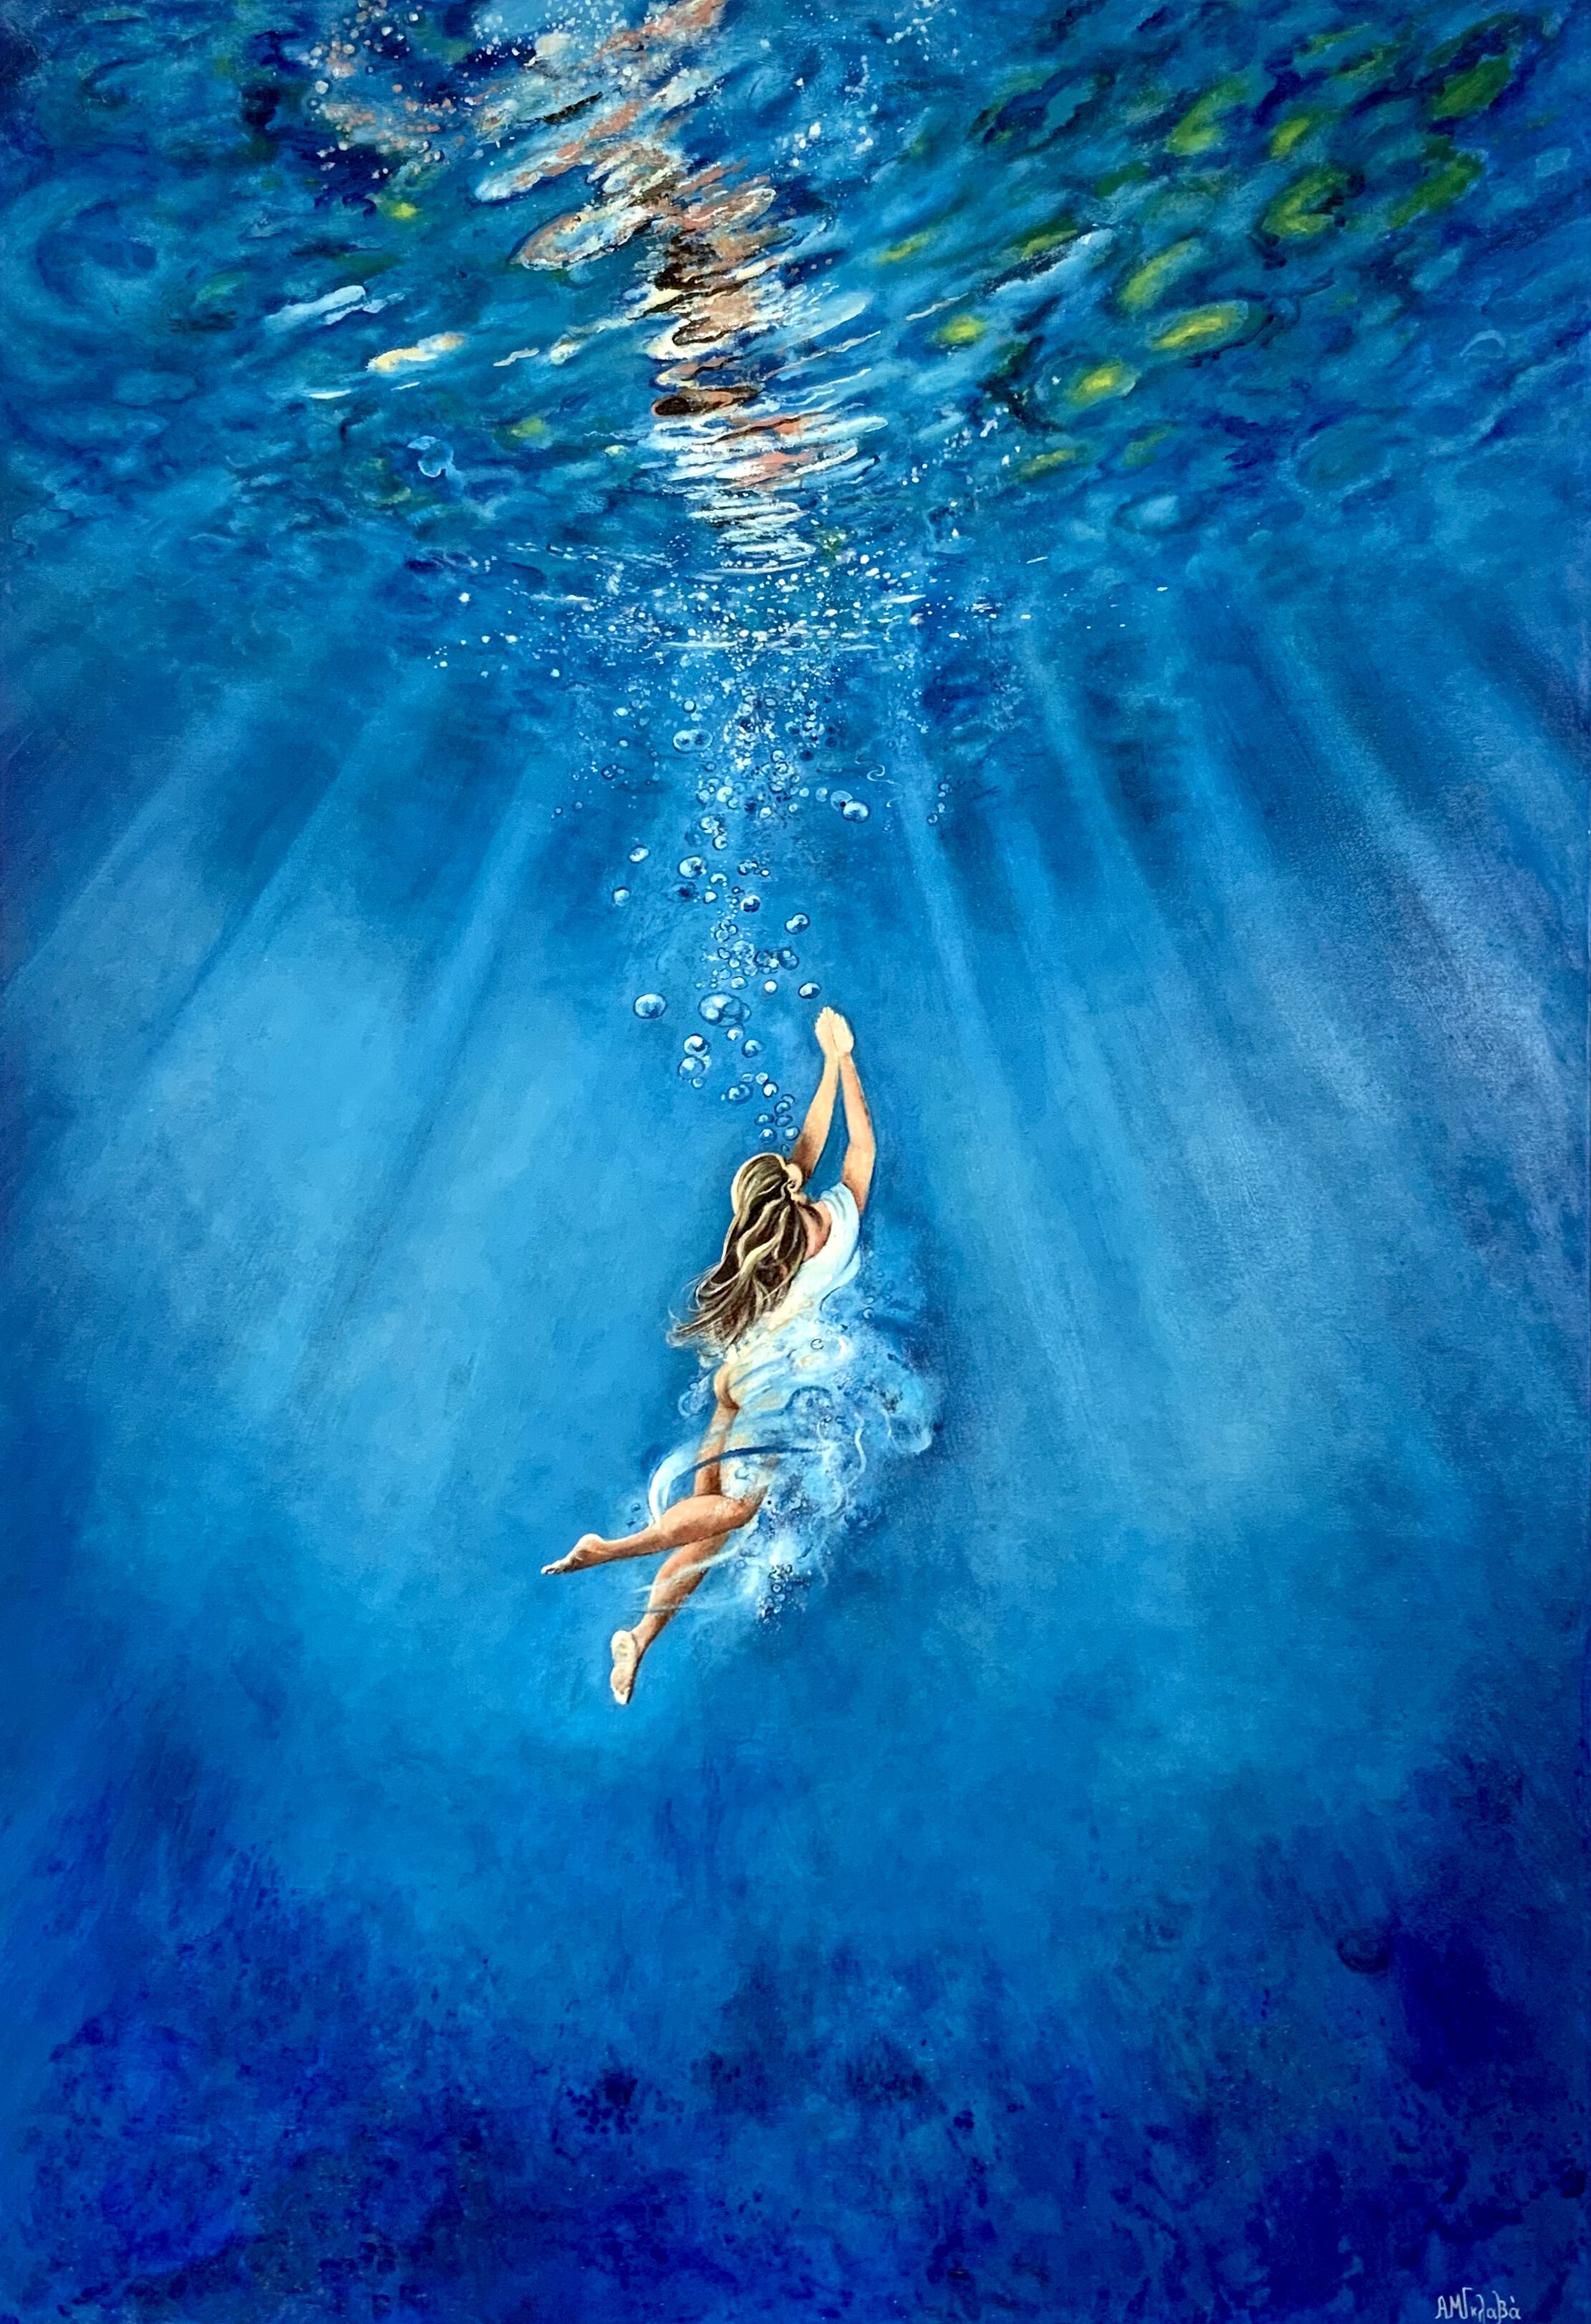  Anastasia Gklava -  Emerging  - Oil on canvas - Dim: 59x39 in / 150x100 cm  